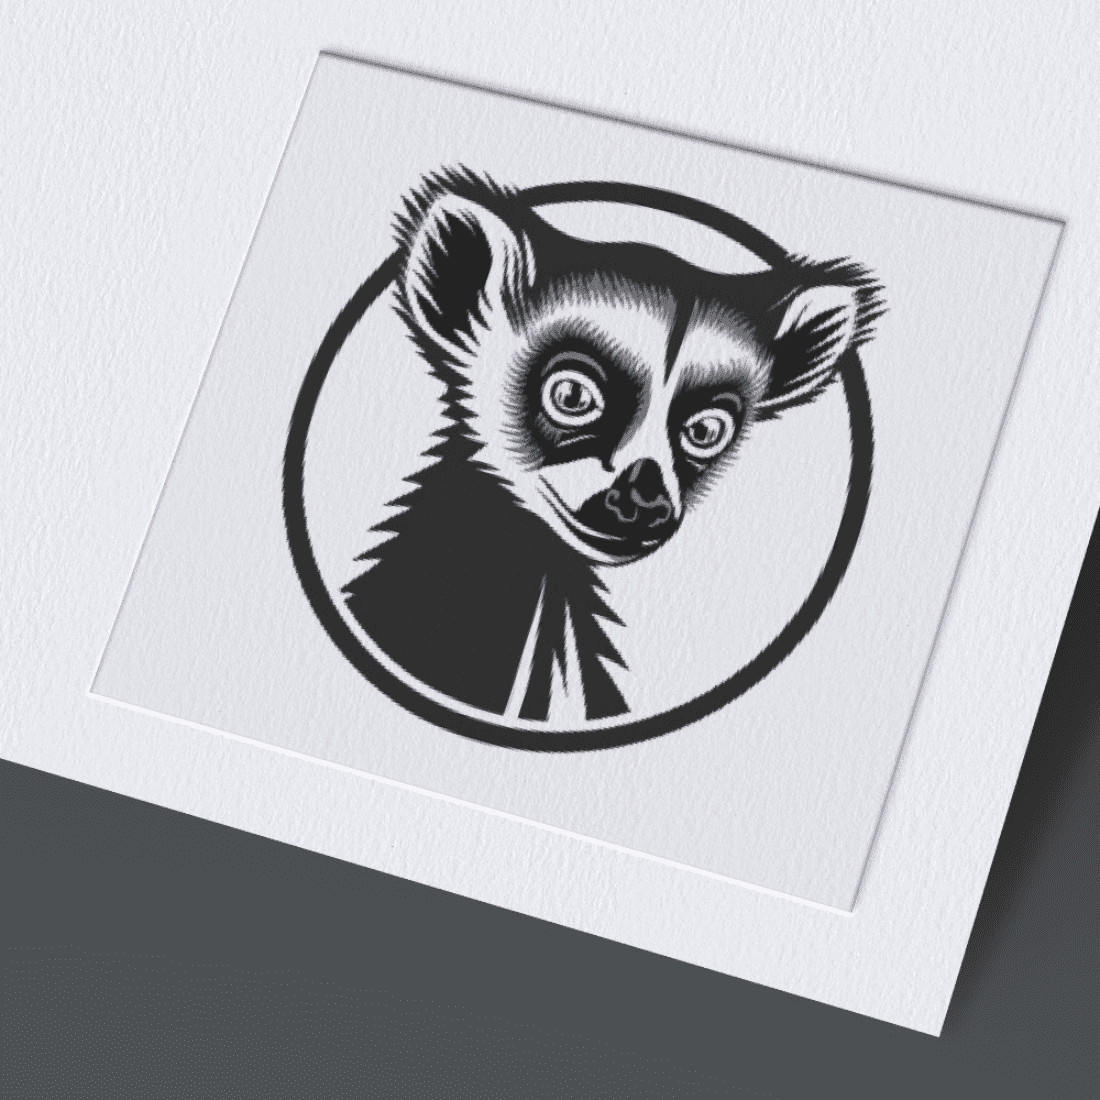 Lemur Logo cover image.